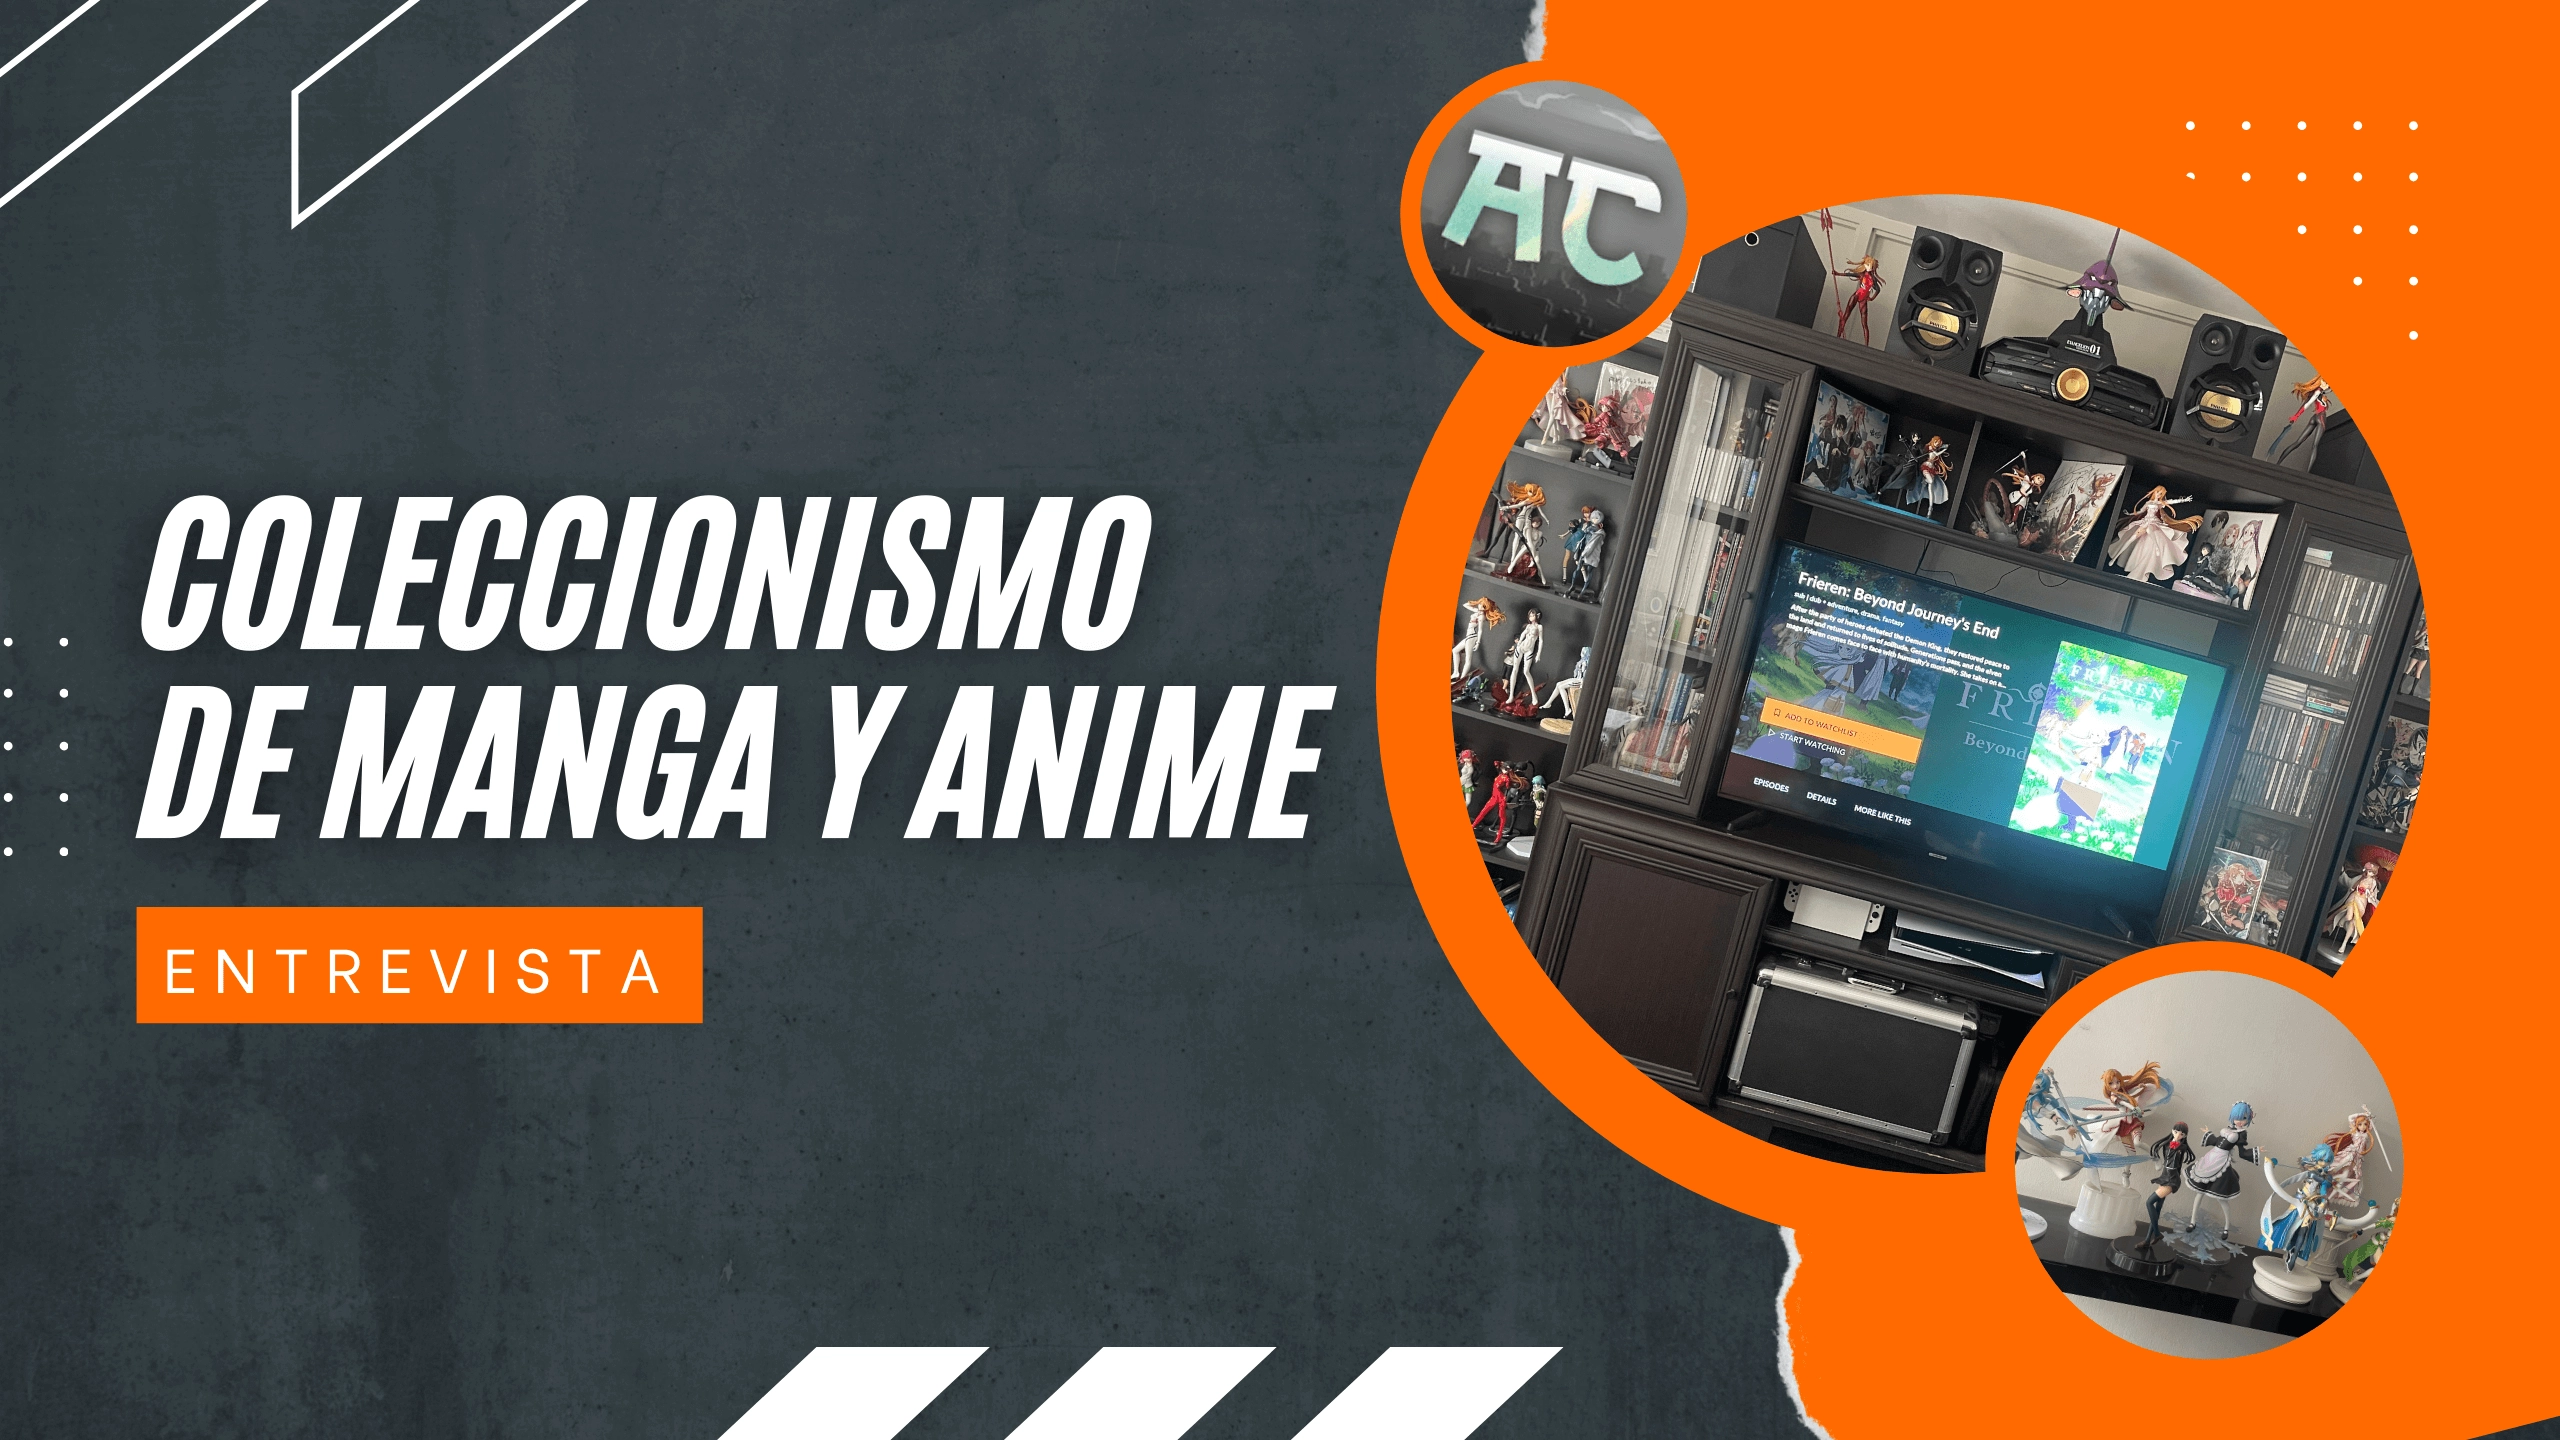 Entrevista: AniCollector nos enseña cómo podemos tener una colección de anime y manga - Coanime.net